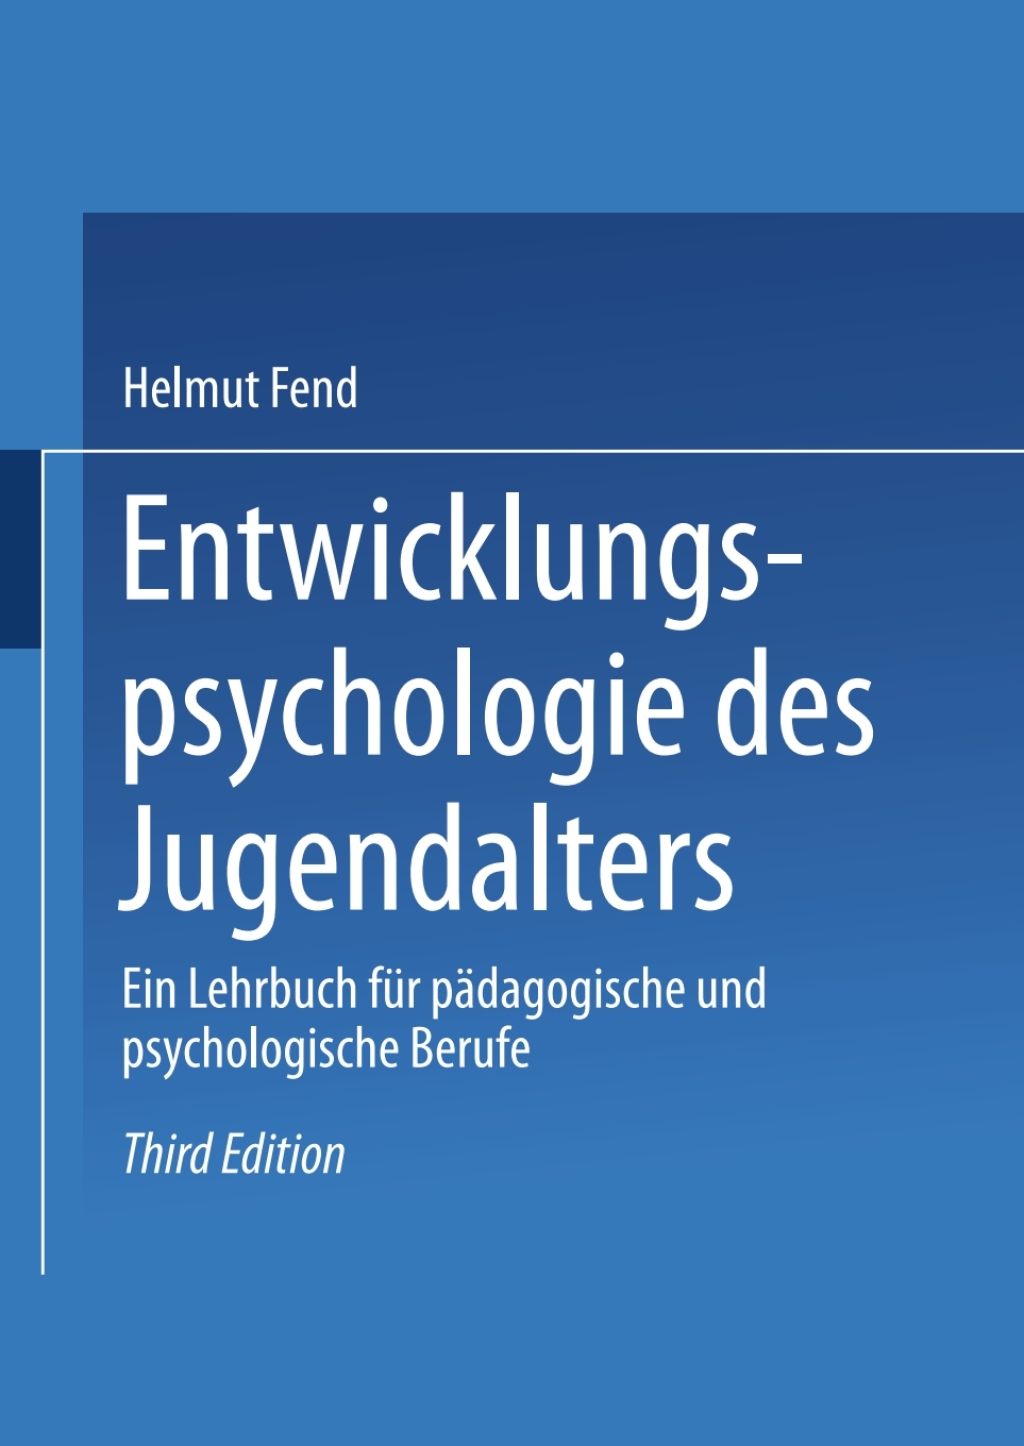 Entwicklungspsychologie des Jugendalters - 3rd Edition (eBook)